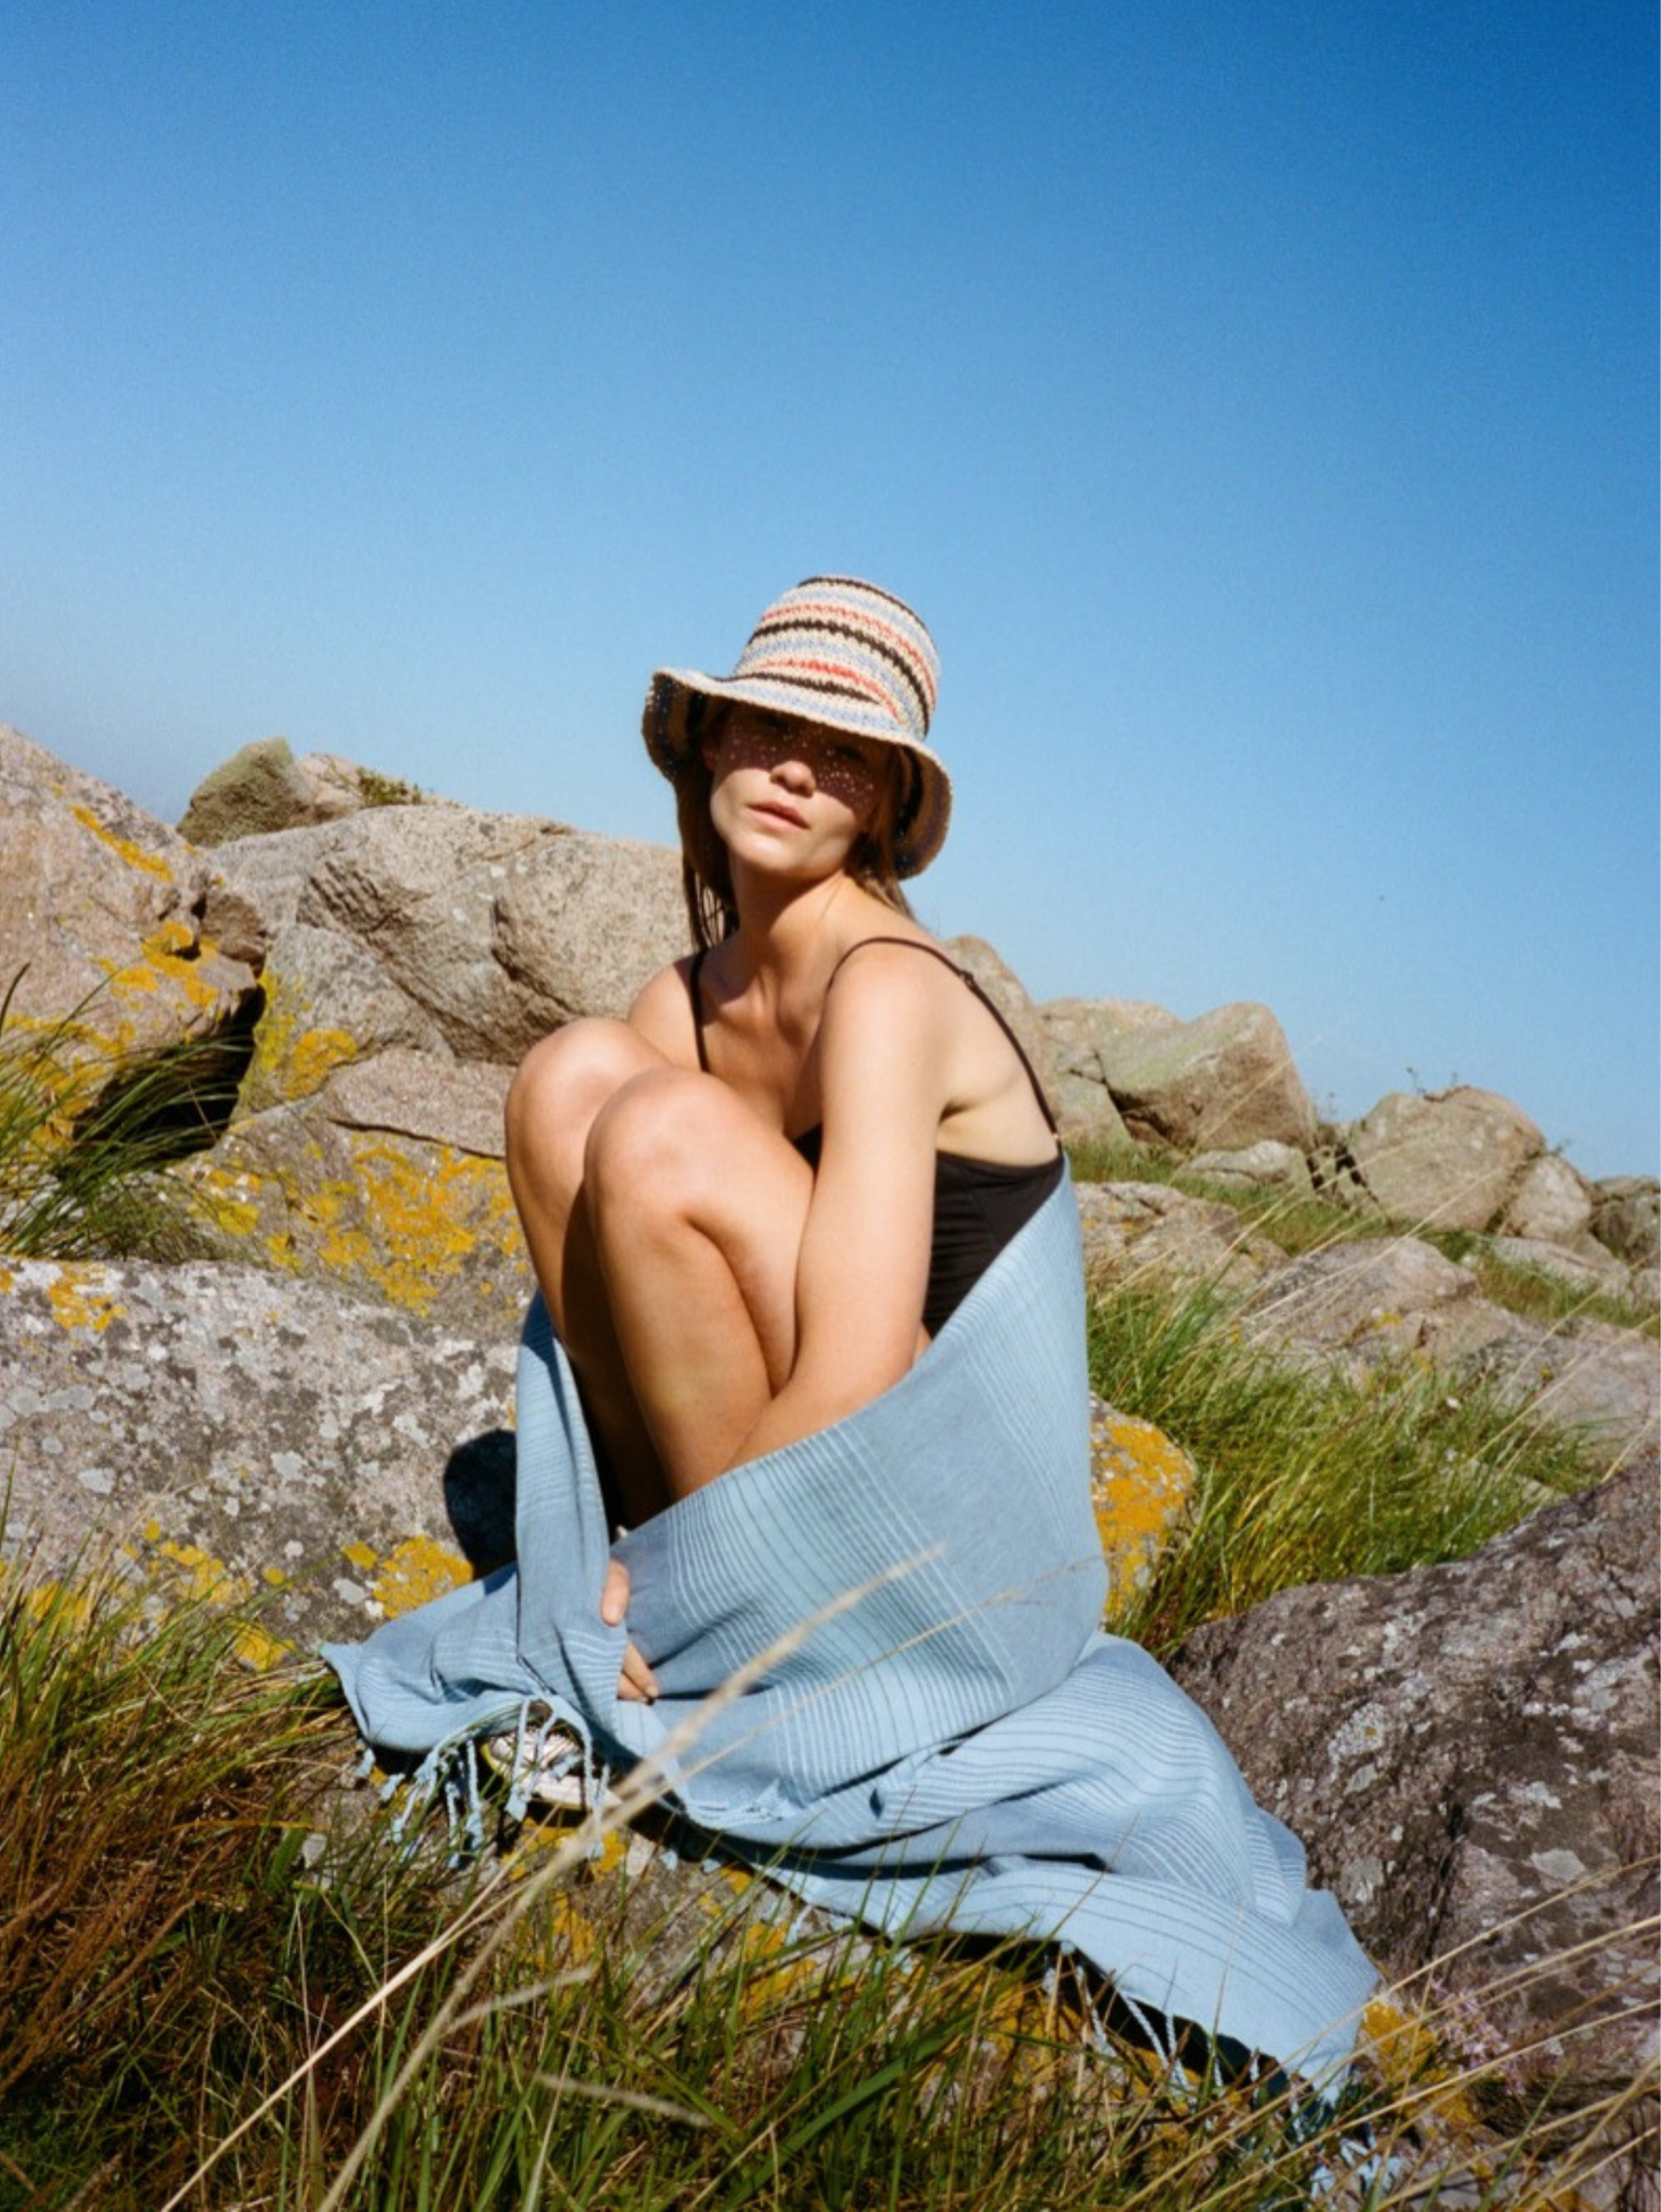 Becksöndergaard, Sunny Cotta Towel - Coronet Blue, accessories, news, swimwear, summer collection, the beach edit